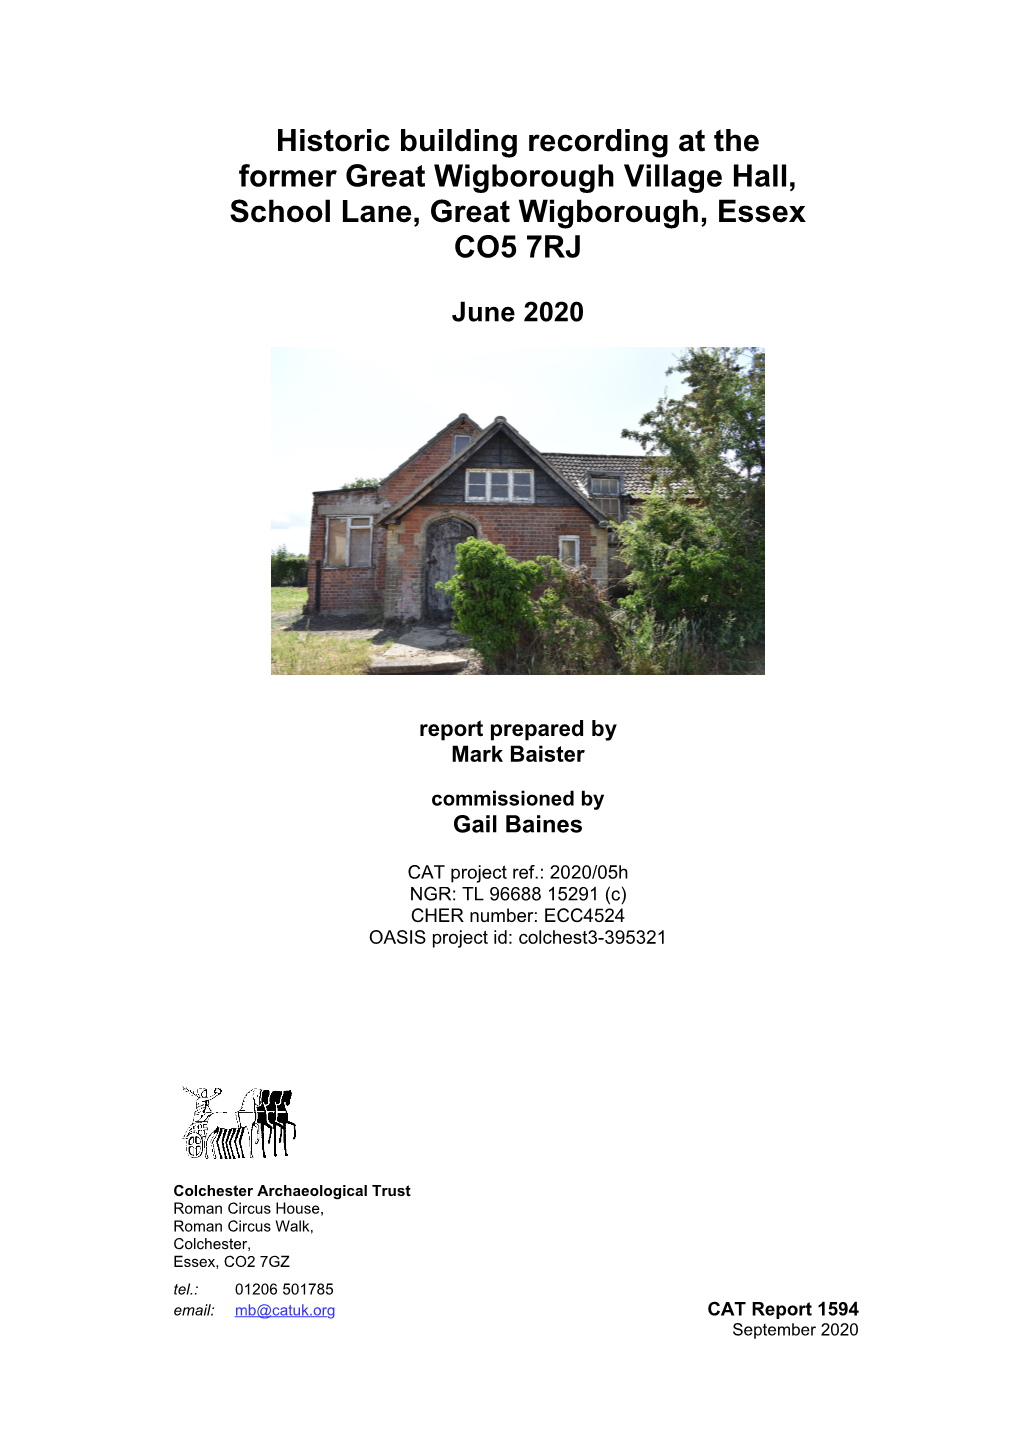 Historic Building Recording at the Former Great Wigborough Village Hall, School Lane, Great Wigborough, Essex CO5 7RJ